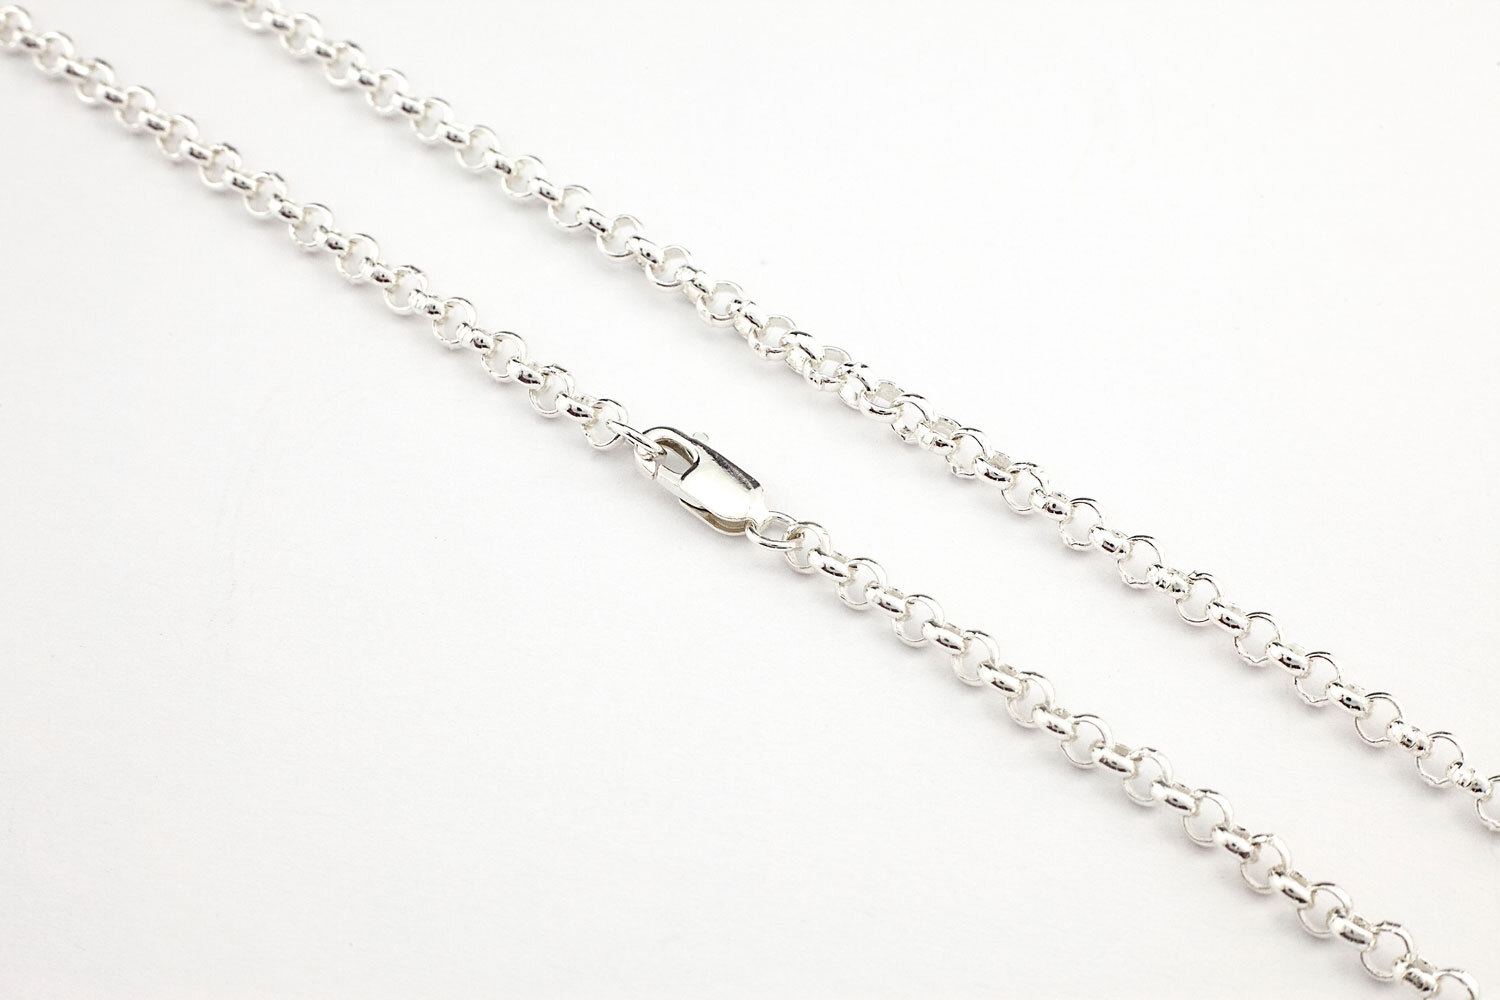 Alternate Rolo Chain Necklace - Bronzallure